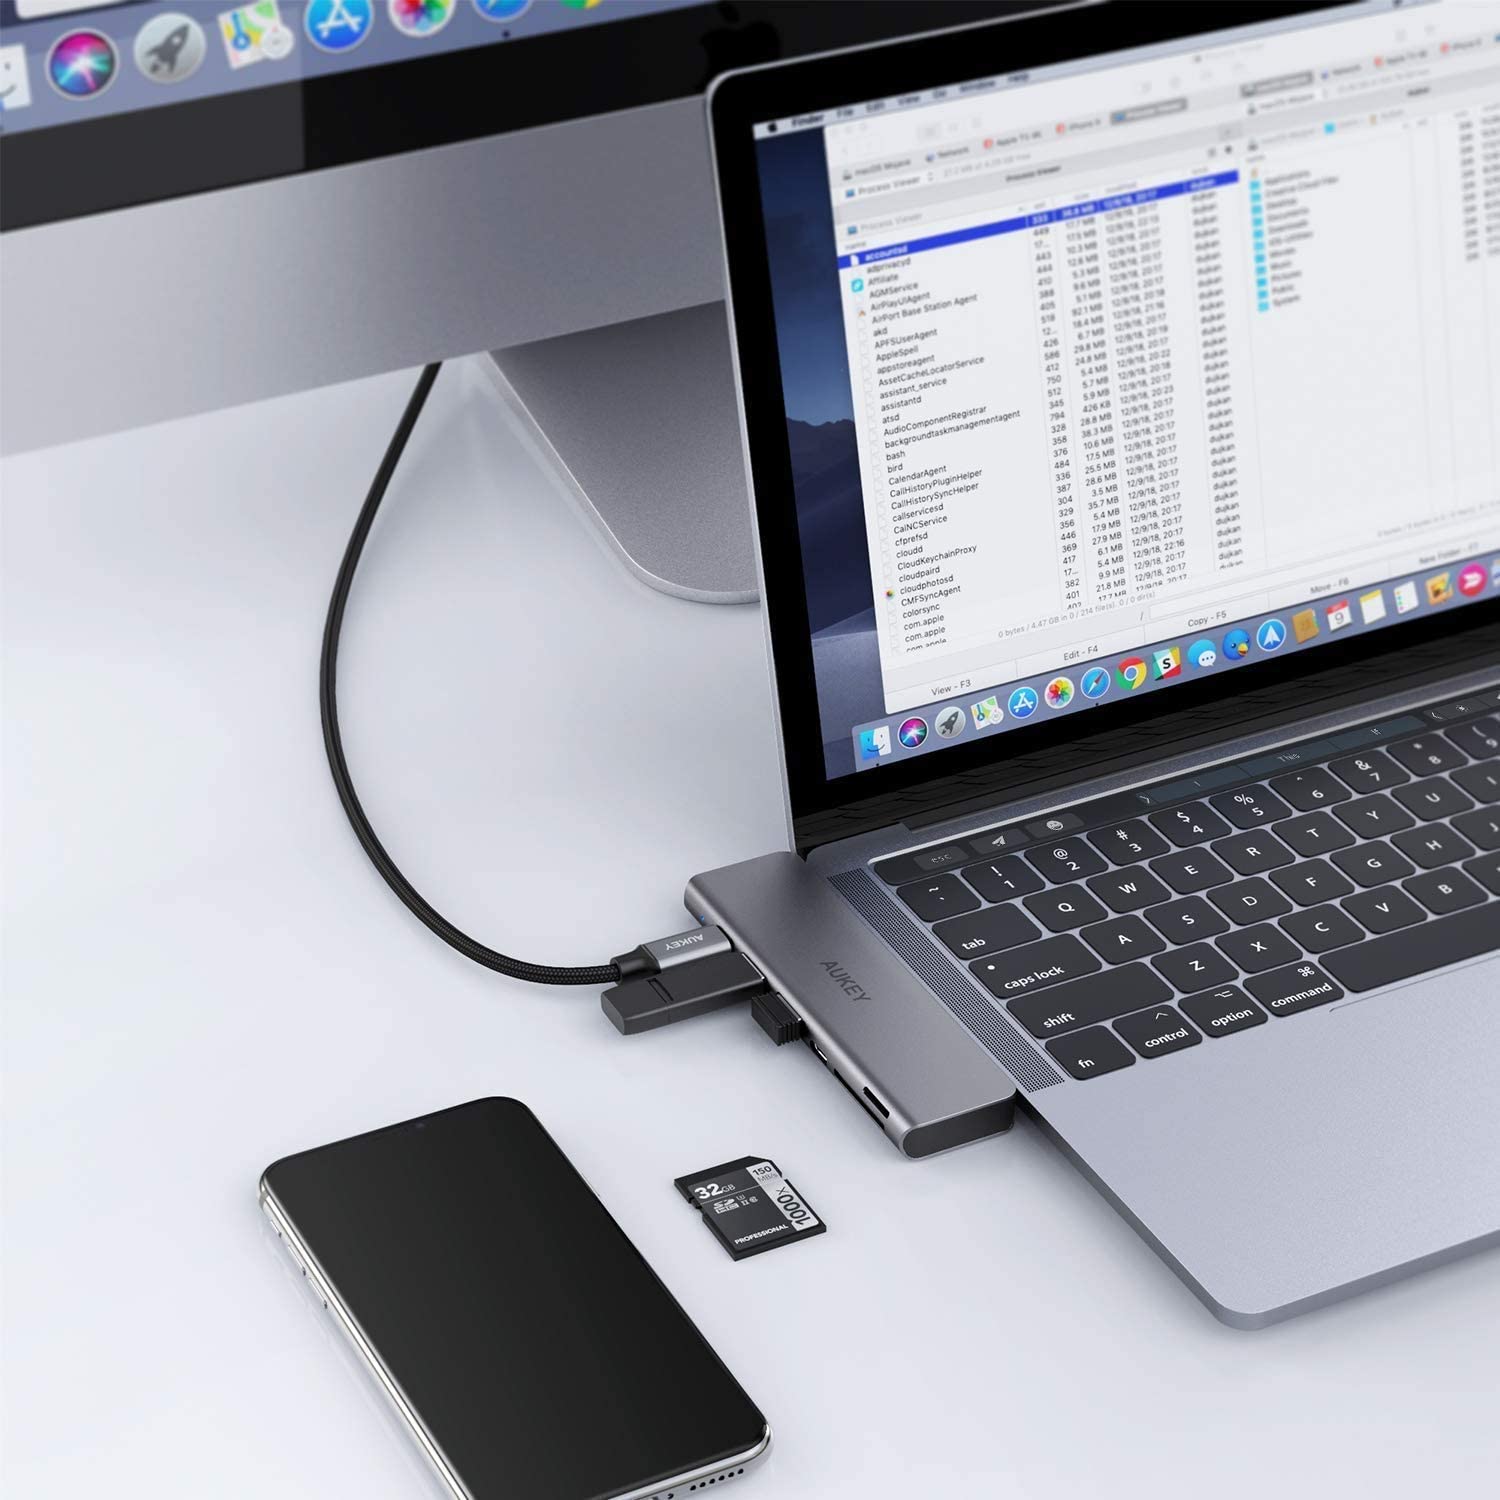 CB-C76 7 in 1 USB C Hub For MacBook Pro with 4K HDMI, Thunderbolt 3, 2 USB 3.0, USB-C Data Port etc